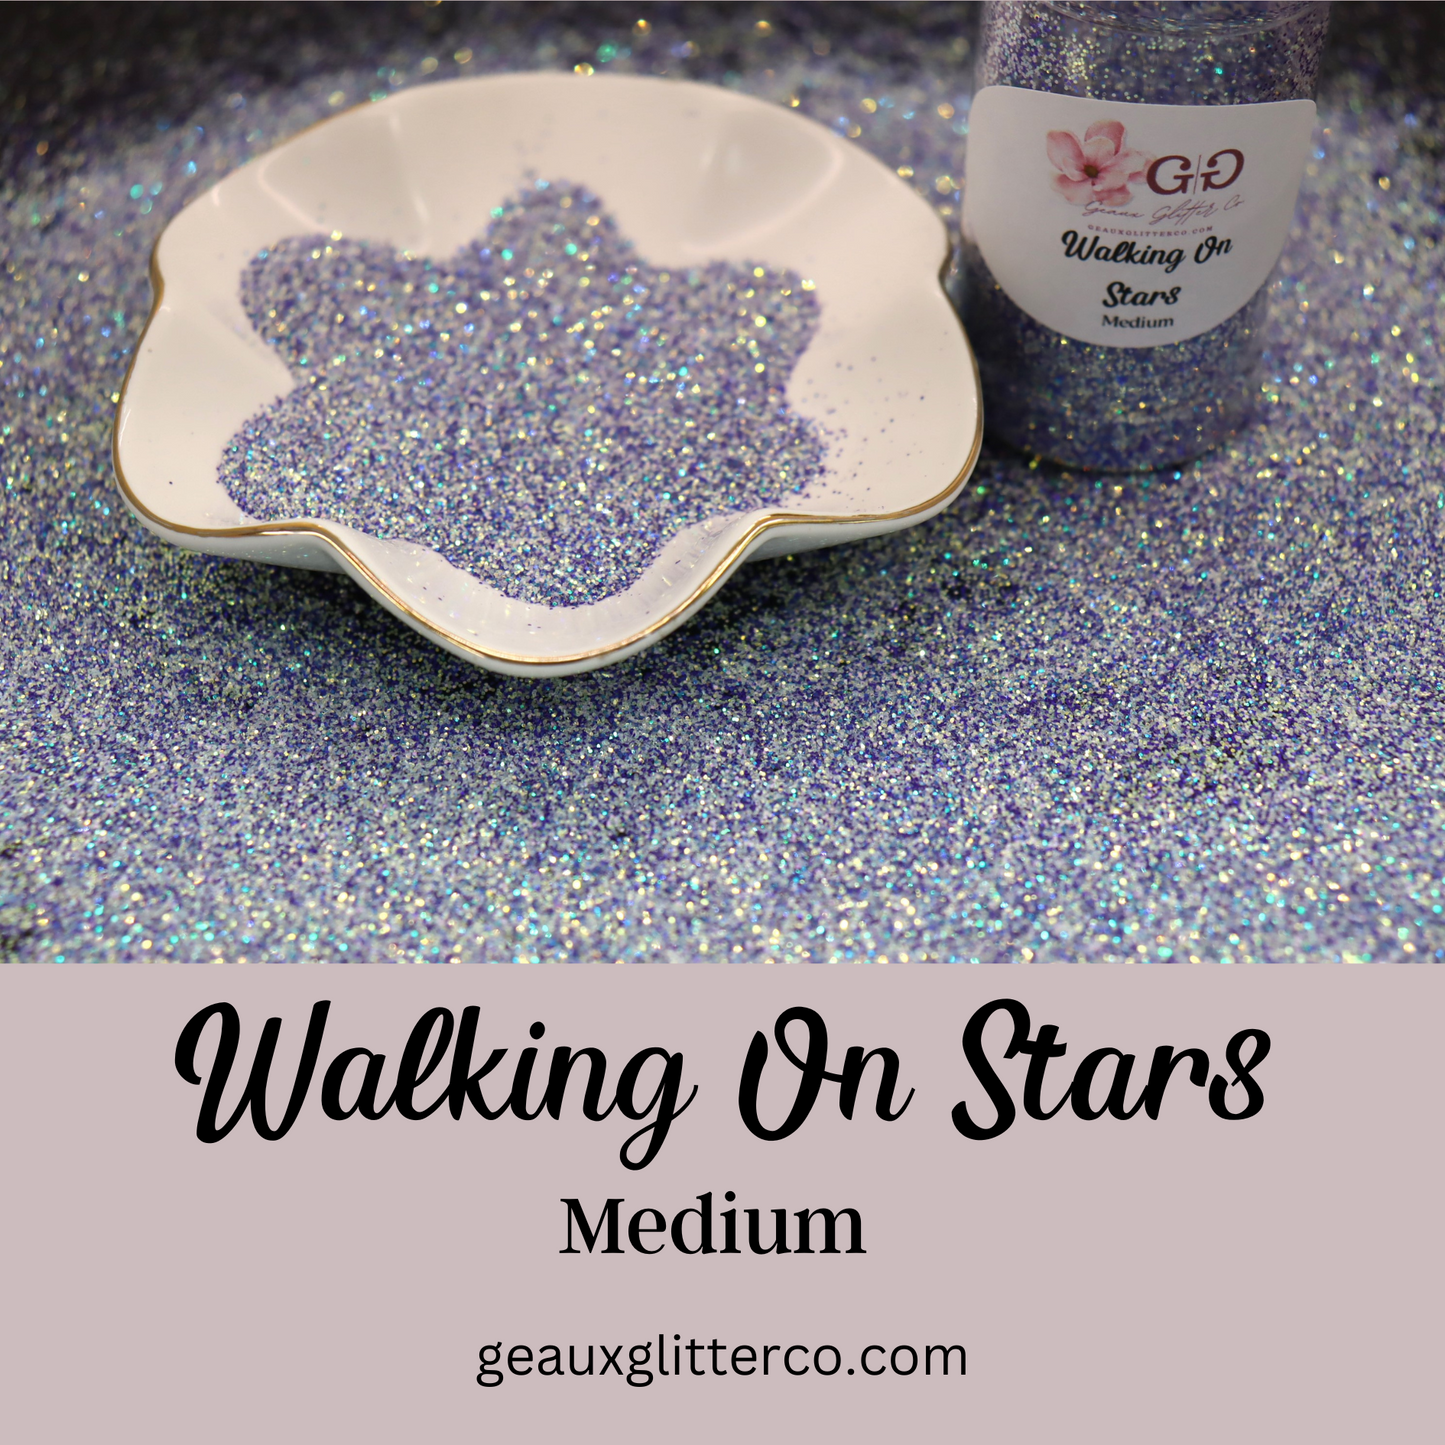 Walking On Stars Medium